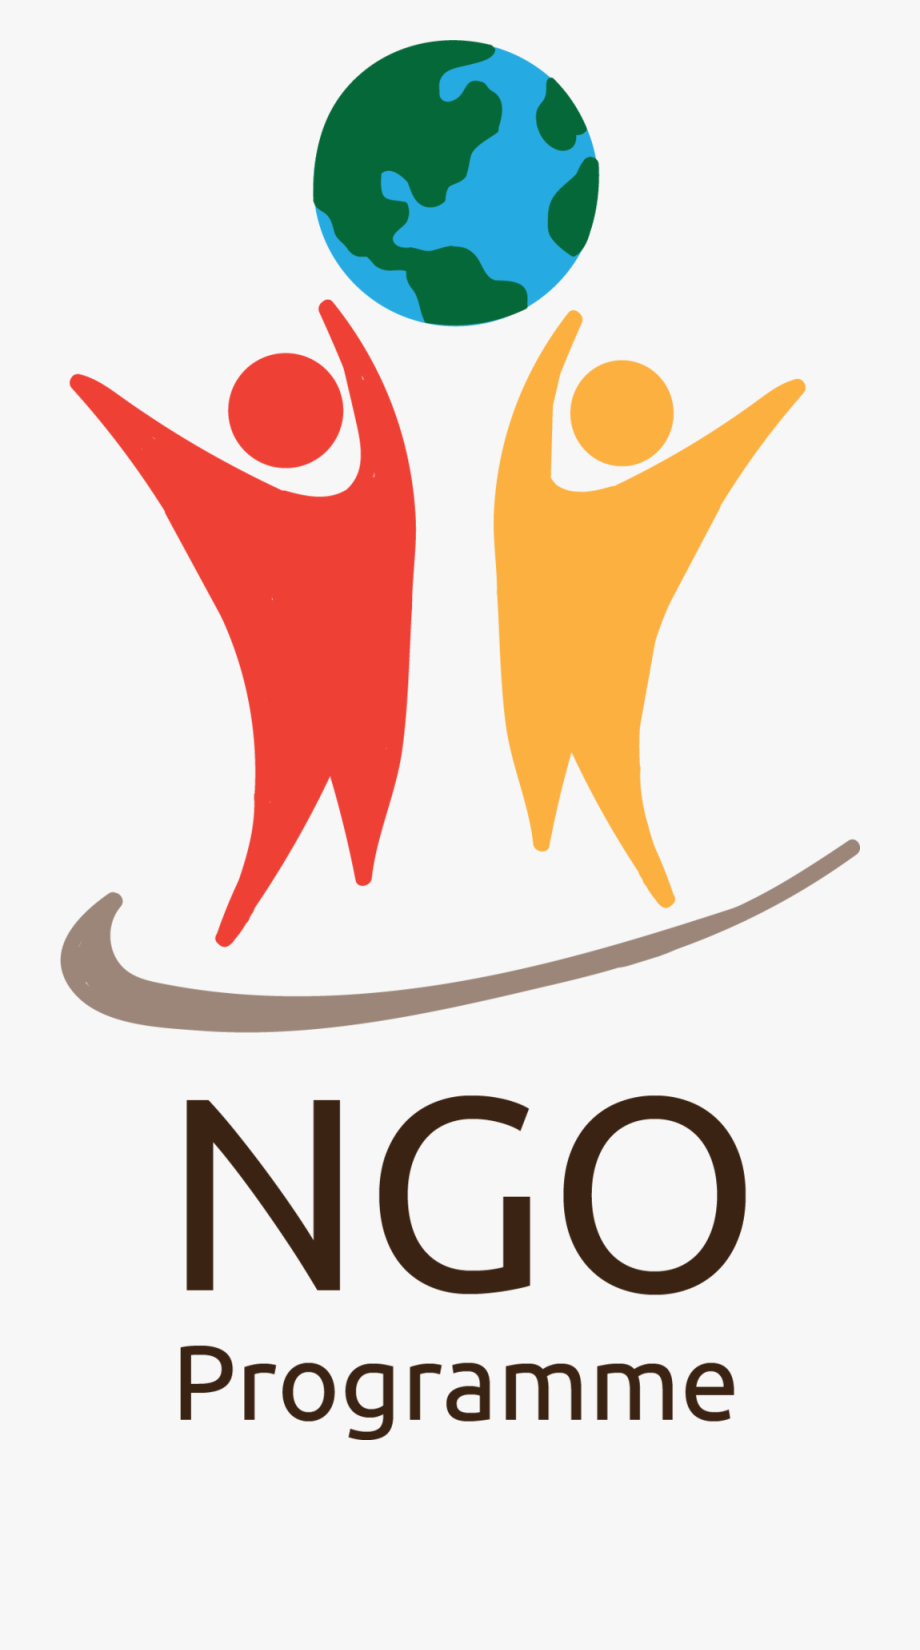 Ngo logo letter design Royalty Free Vector Image